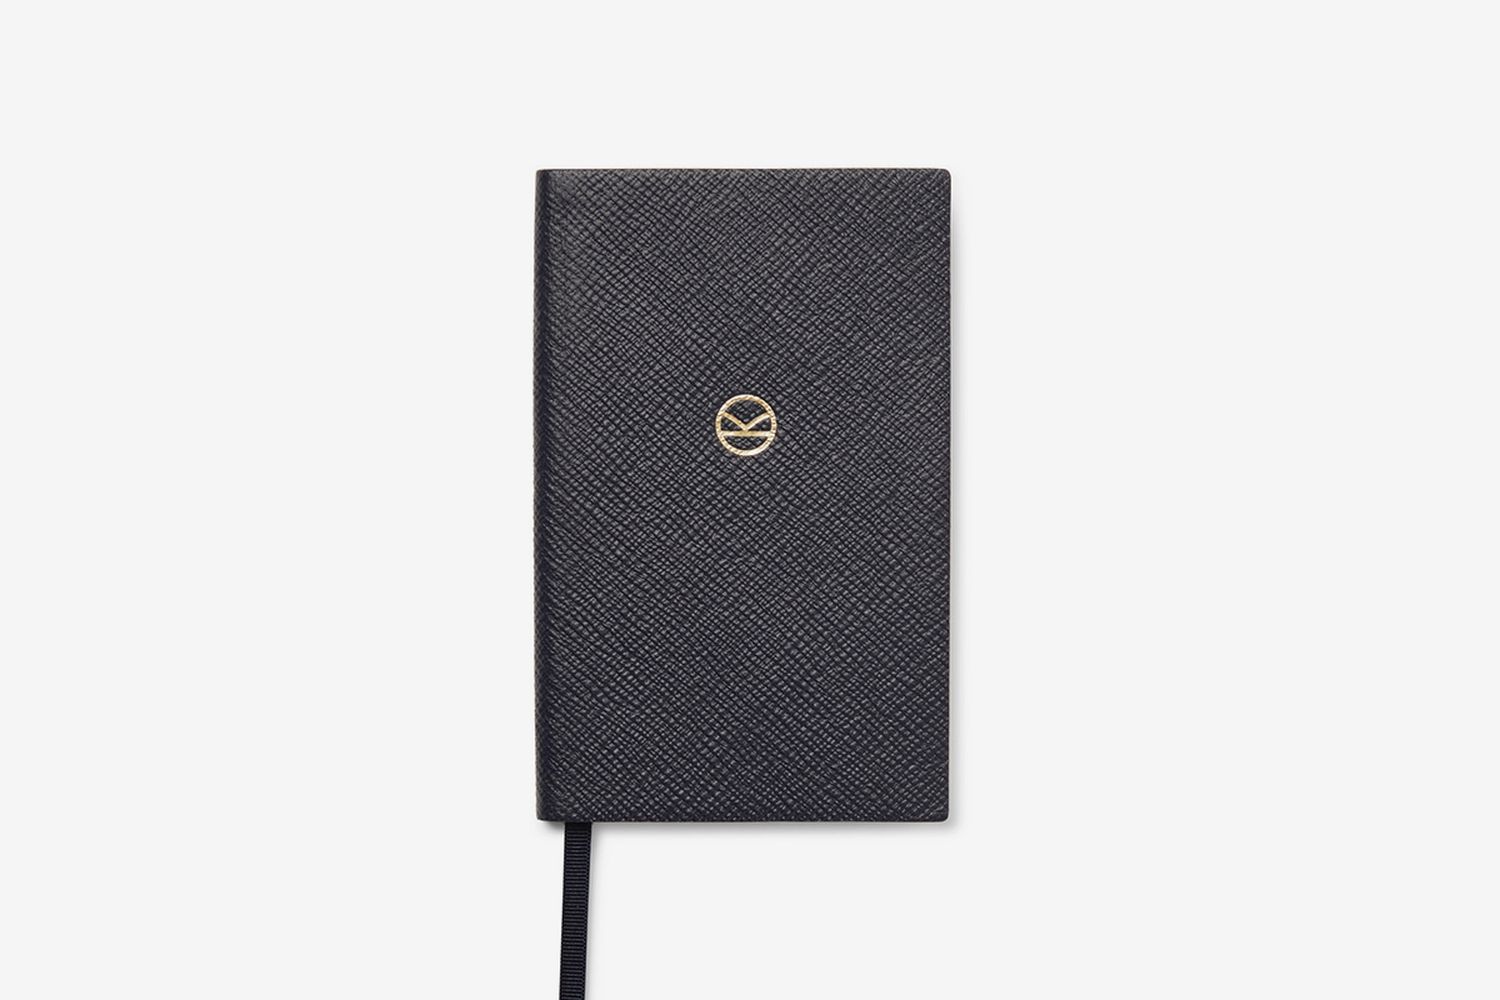 Panama Leather Notebook